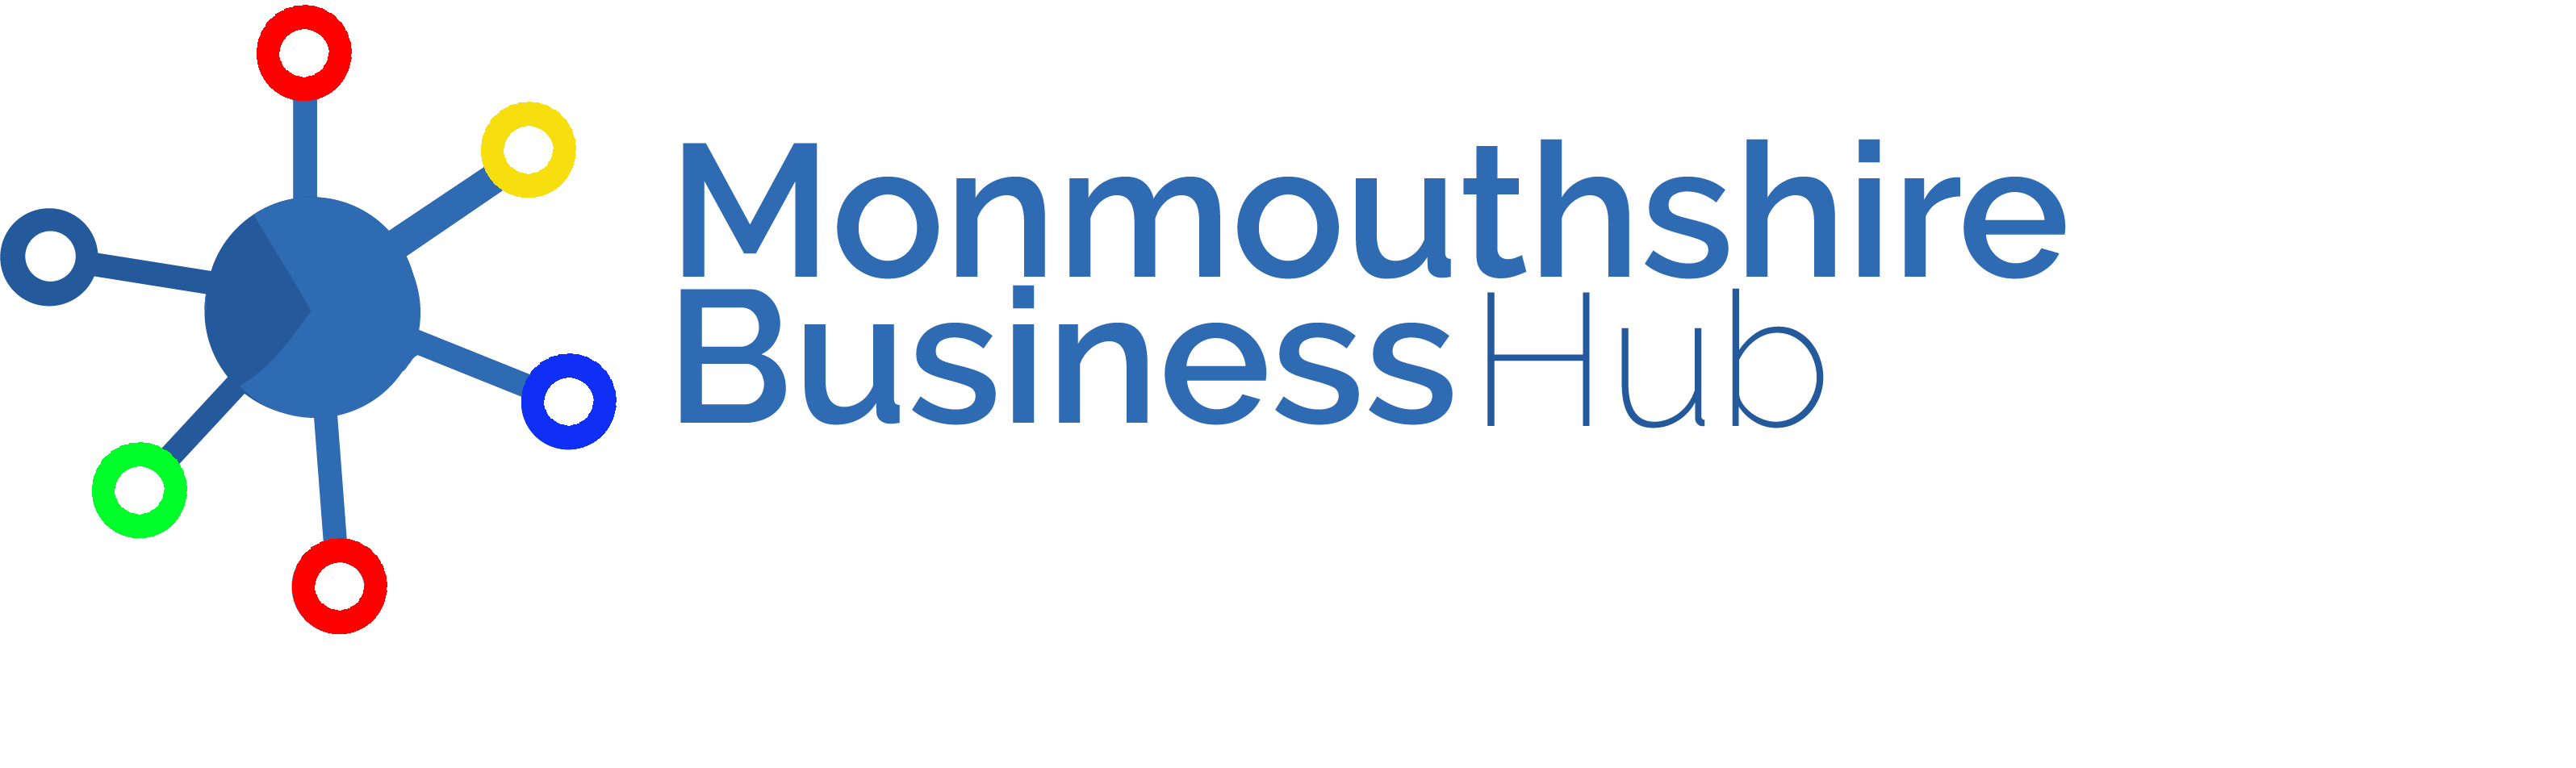 Monmouthshire Business Hub Logo